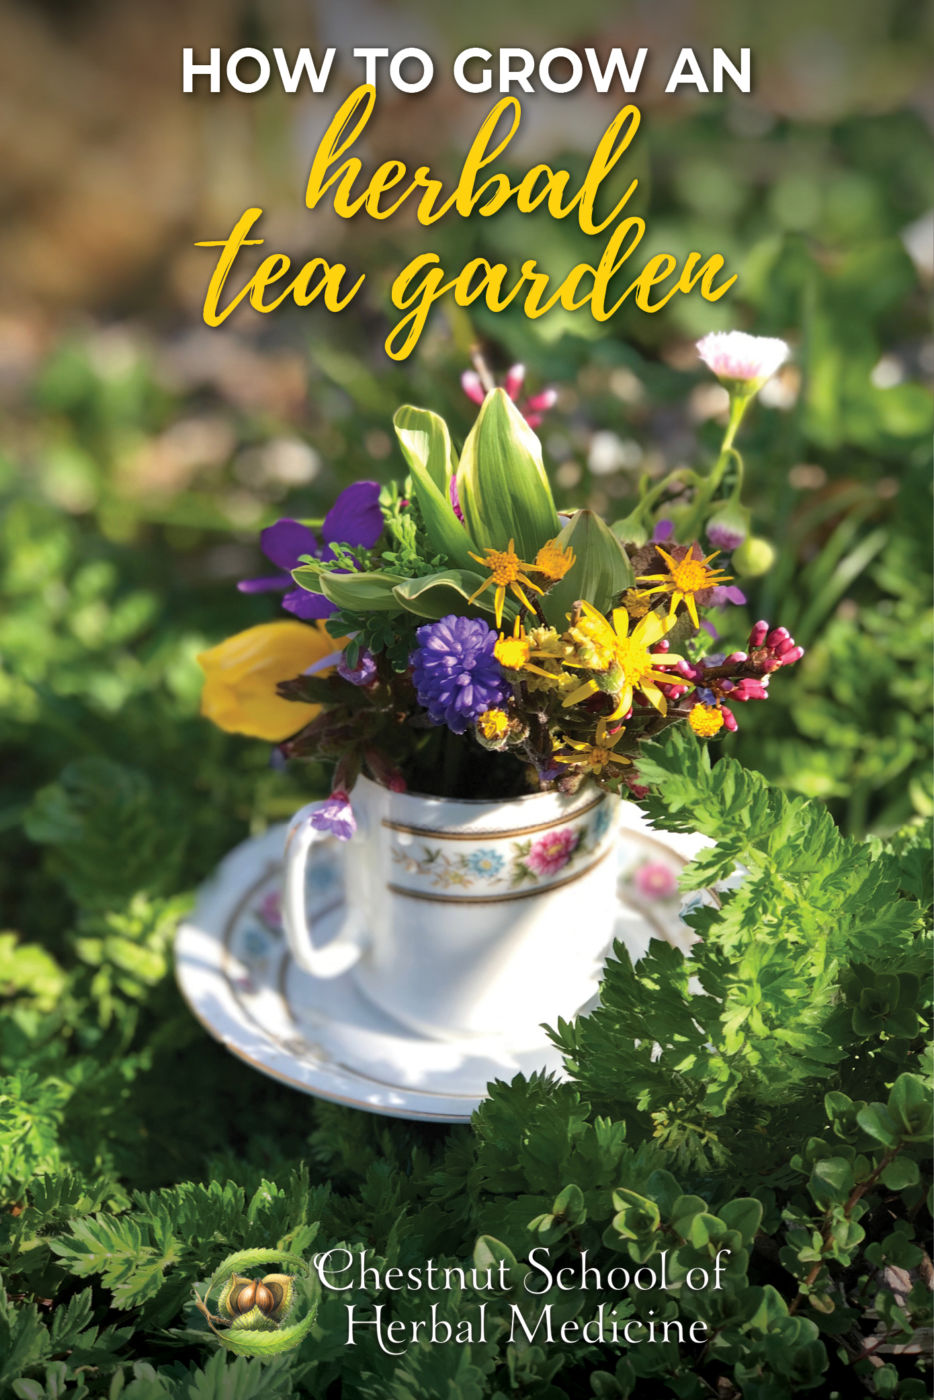 How to Grow an Herbal Tea Garden.